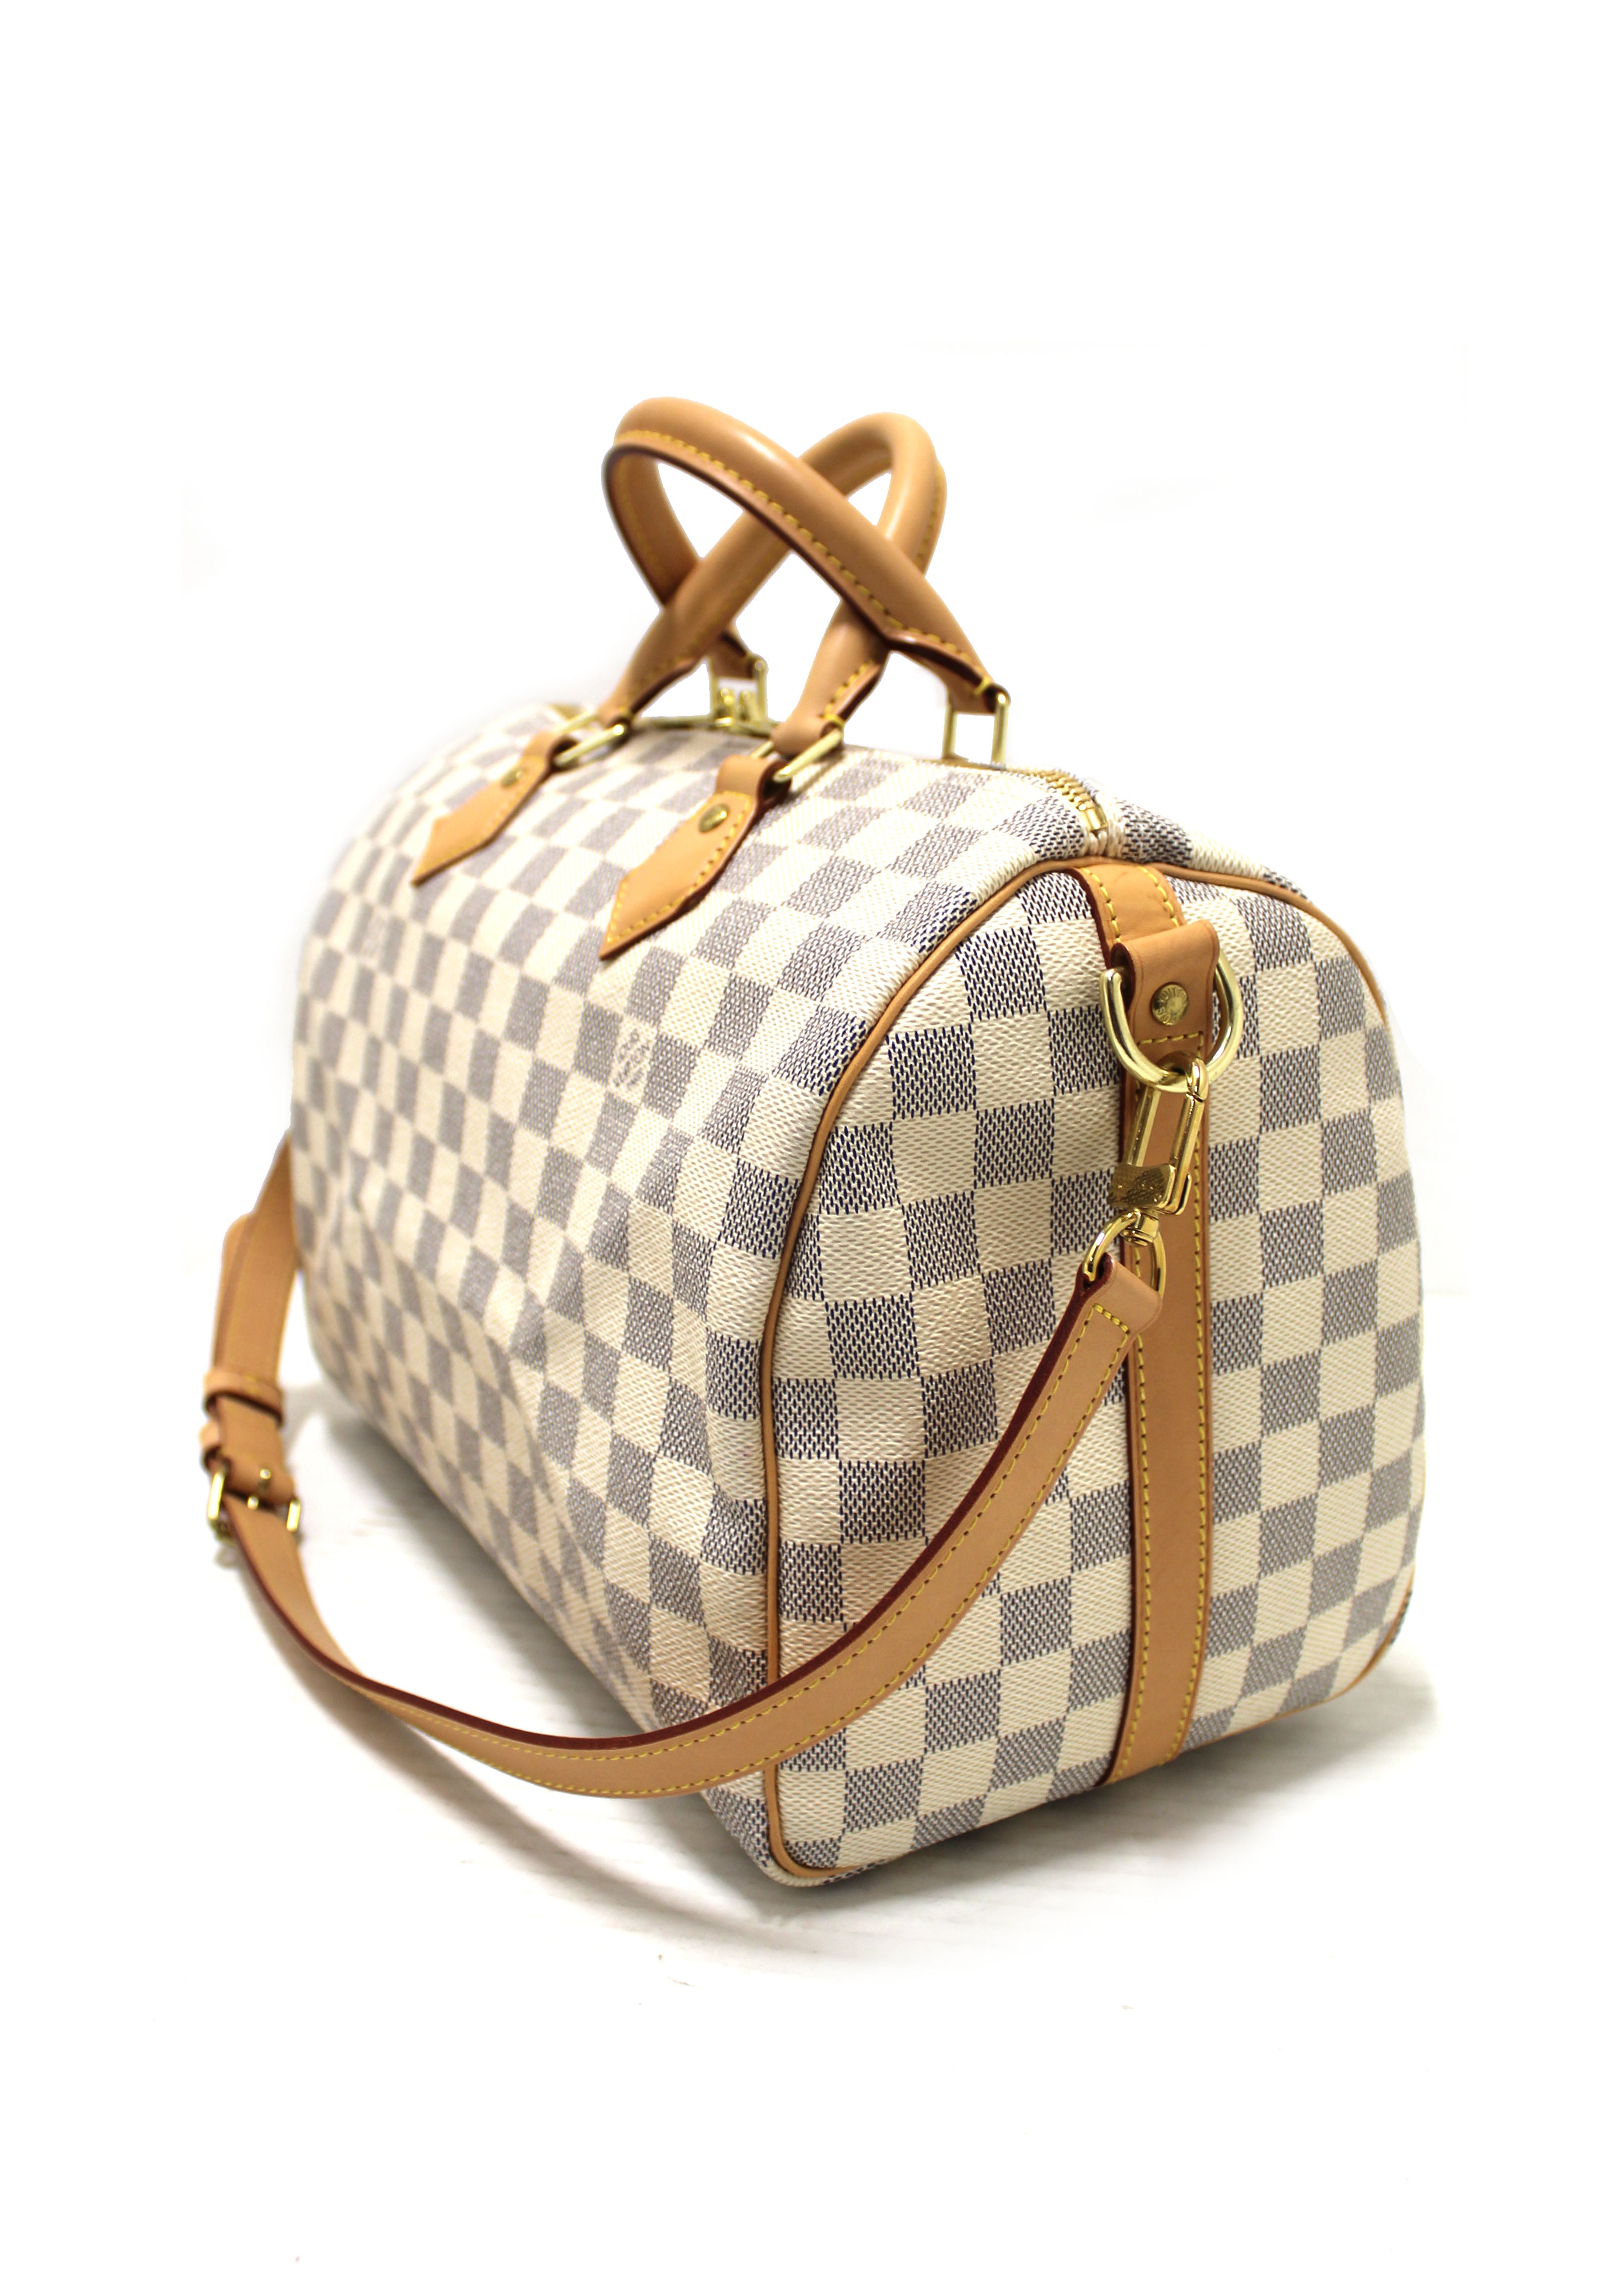 Louis Vuitton Speedy 30 Damier Azur Handbag